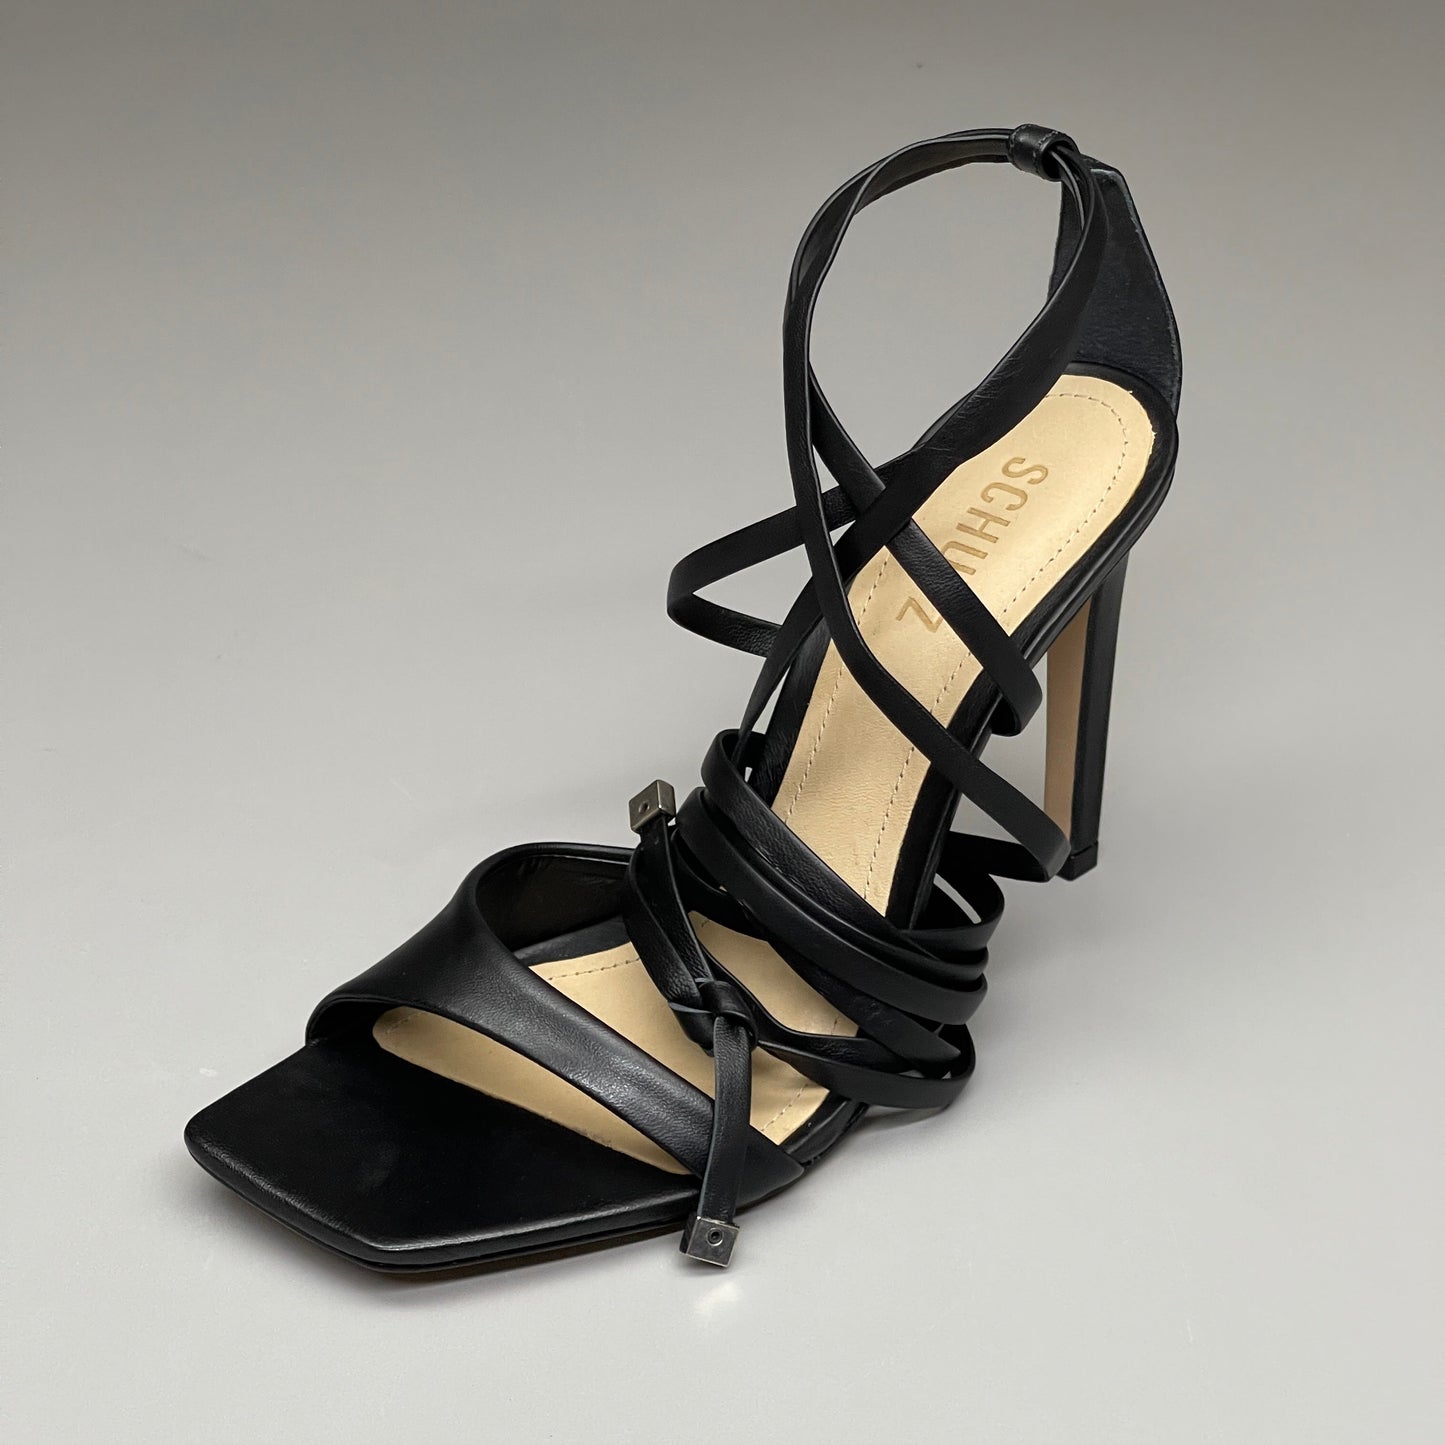 SCHUTZ Bryce Ankle Tie Women's Leather High Heel Strappy Sandal Black Sz 7B (New)